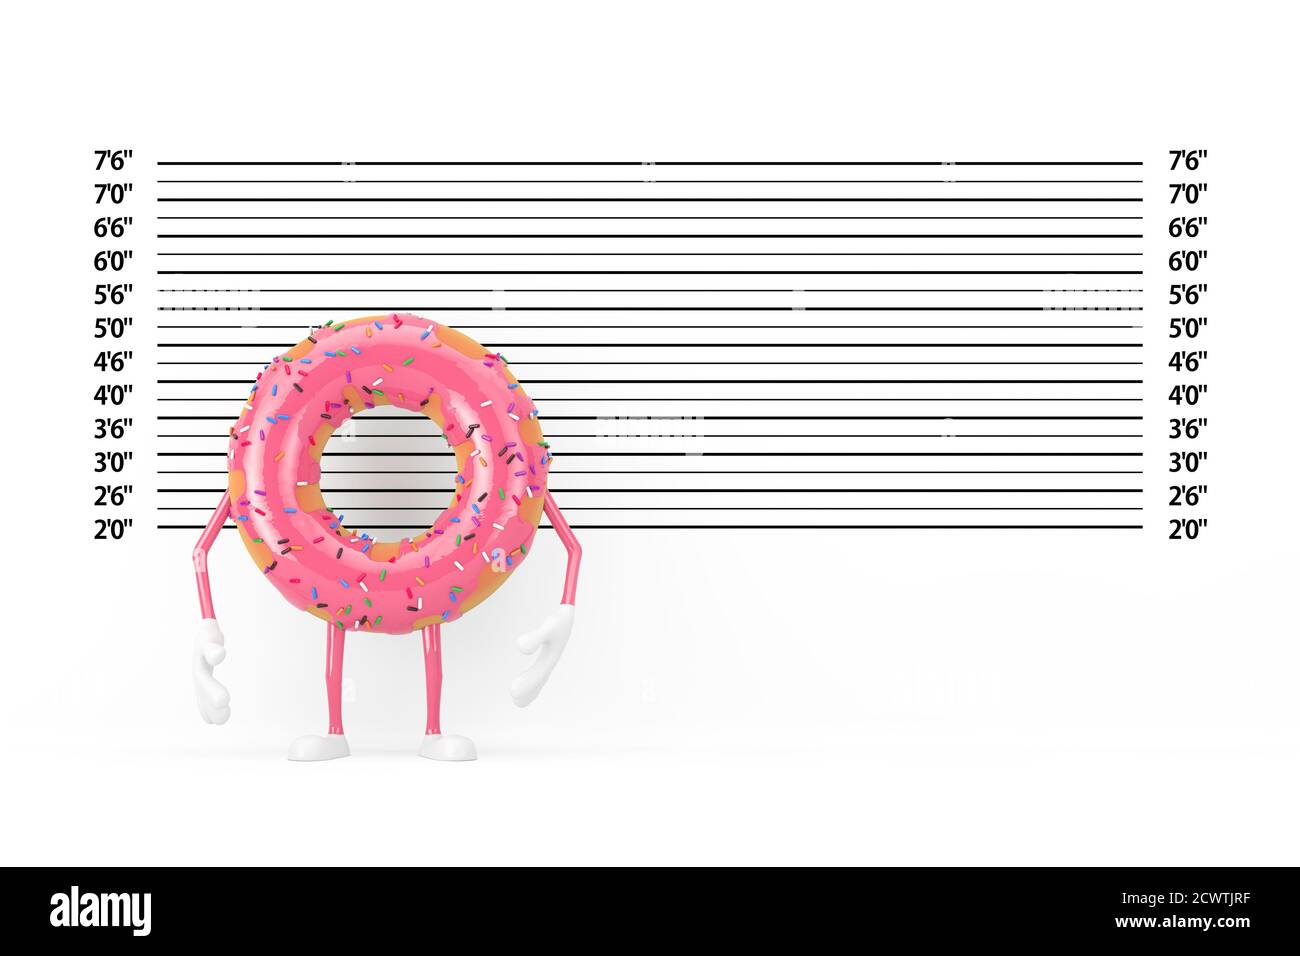 Big Strawberry Rose glacé Donut personnage Mascot en face de police ligne ou Mugshot fond extrême gros plan. Rendu 3d Banque D'Images